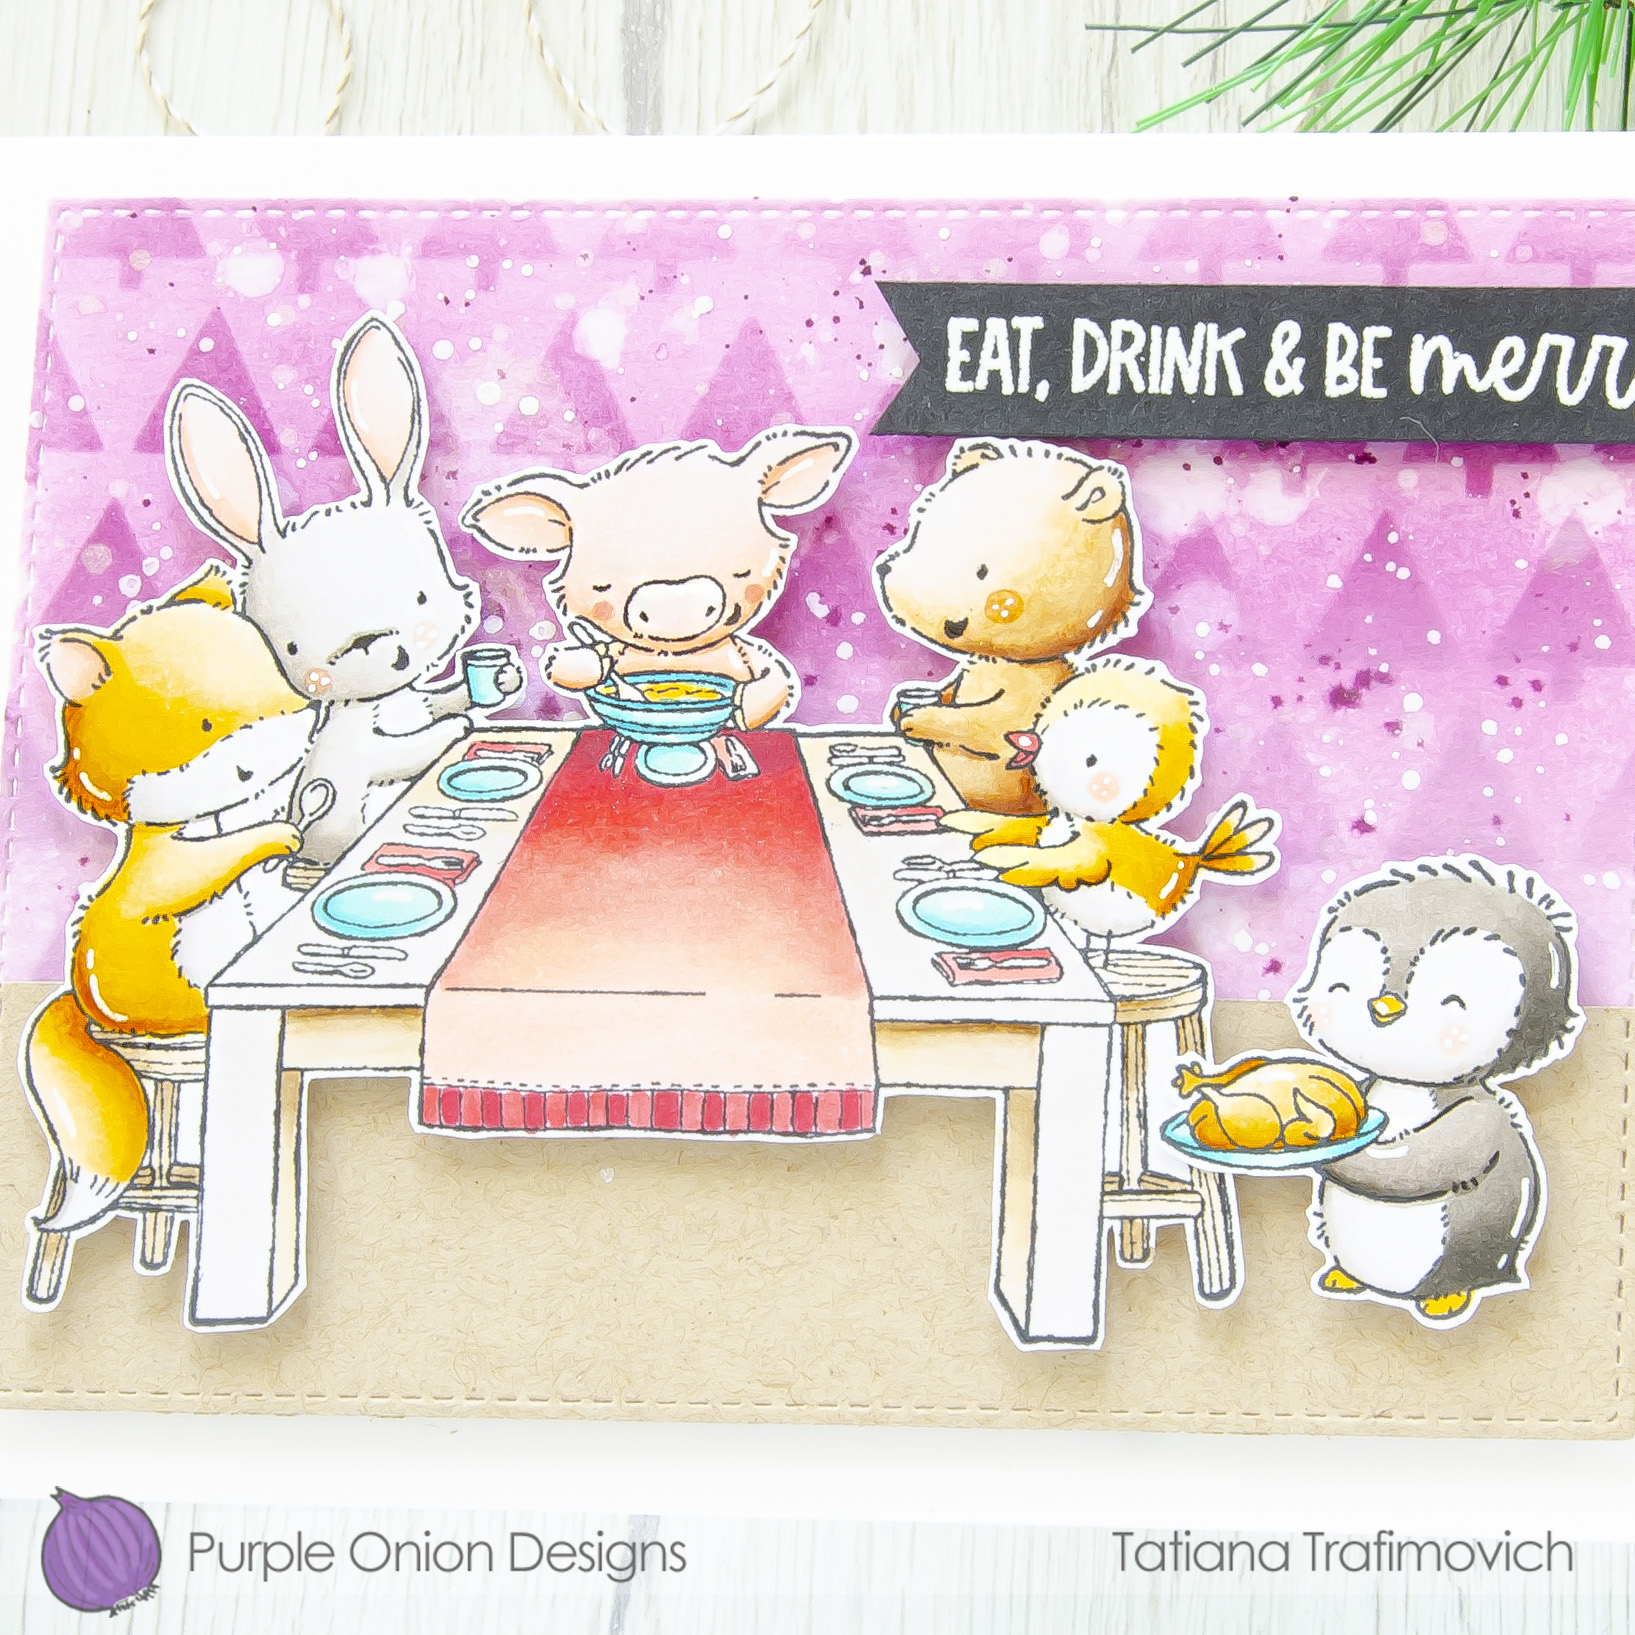 Eat, Drink & Be Merry #handmade card by Tatiana Trafimovich #tatianacraftandart - stamps by Purple Onion Designs